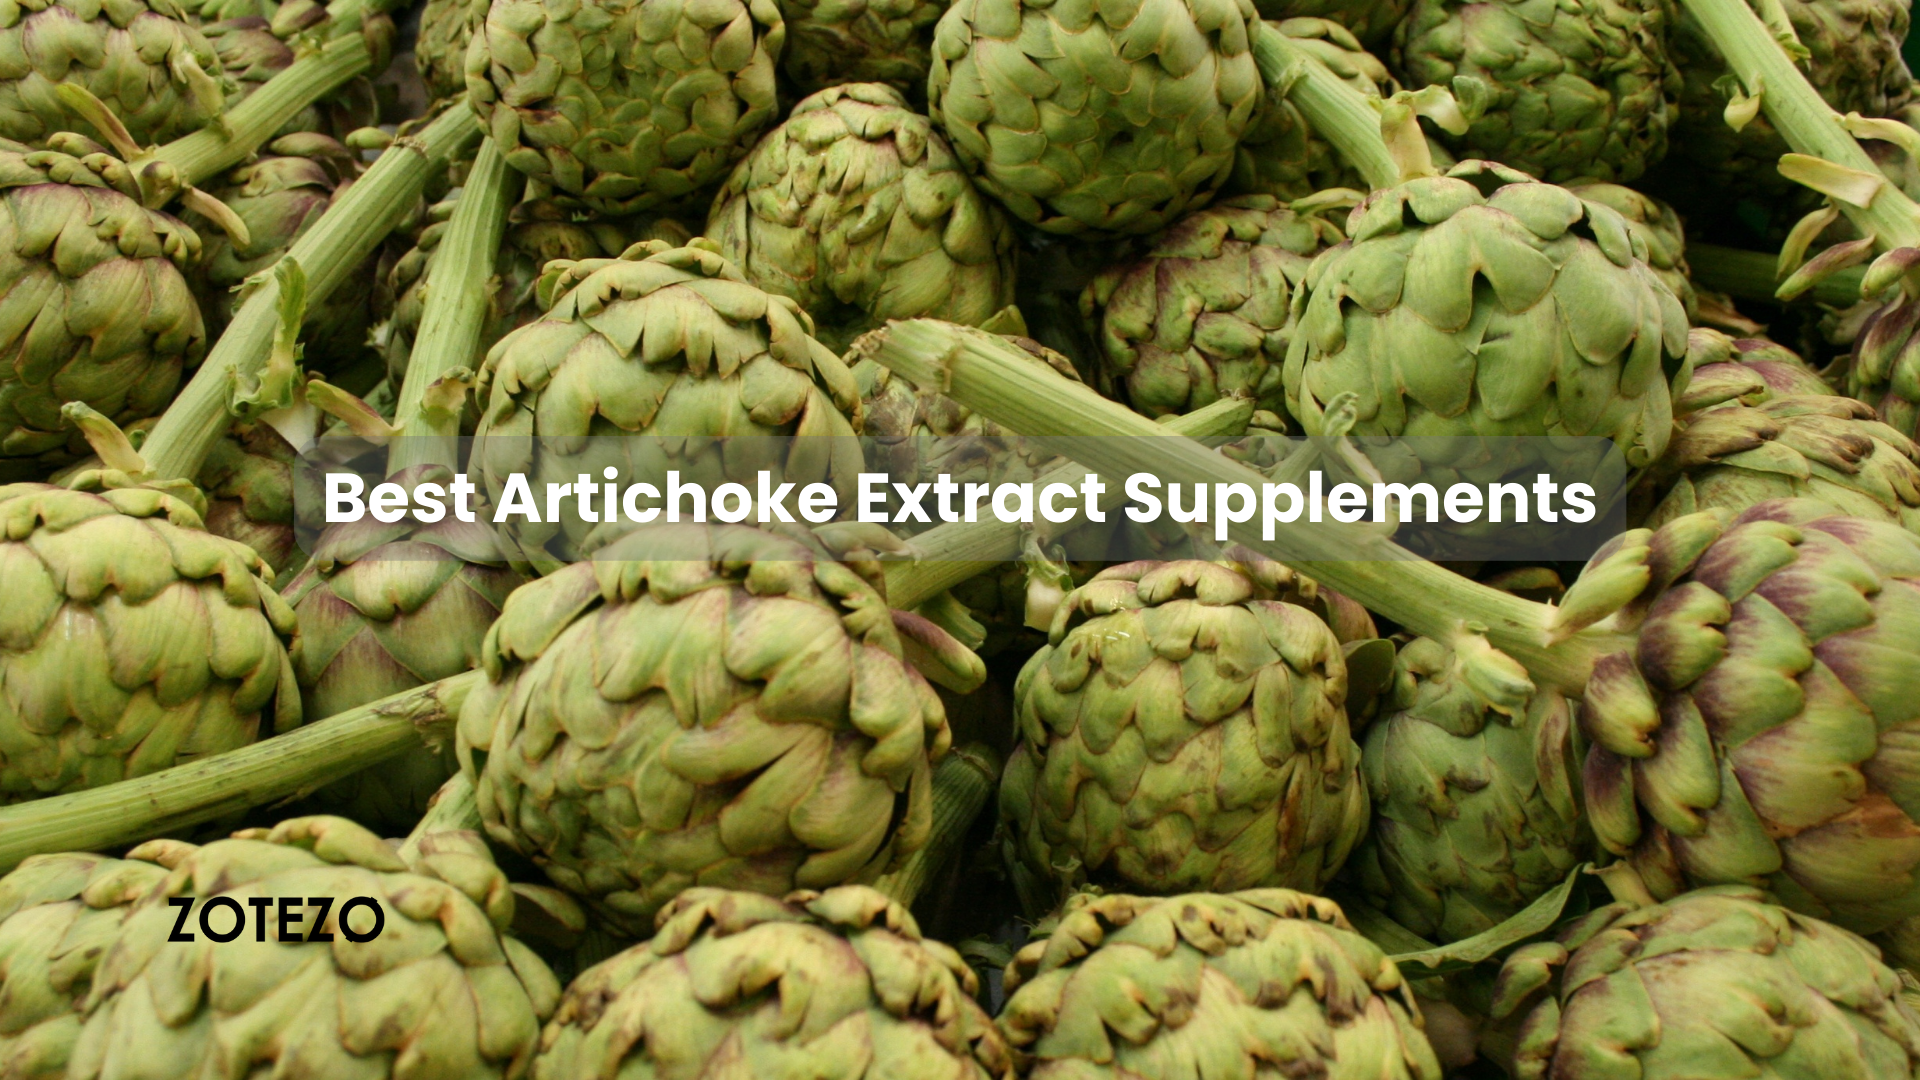 Artichoke Extract Supplements in UAE